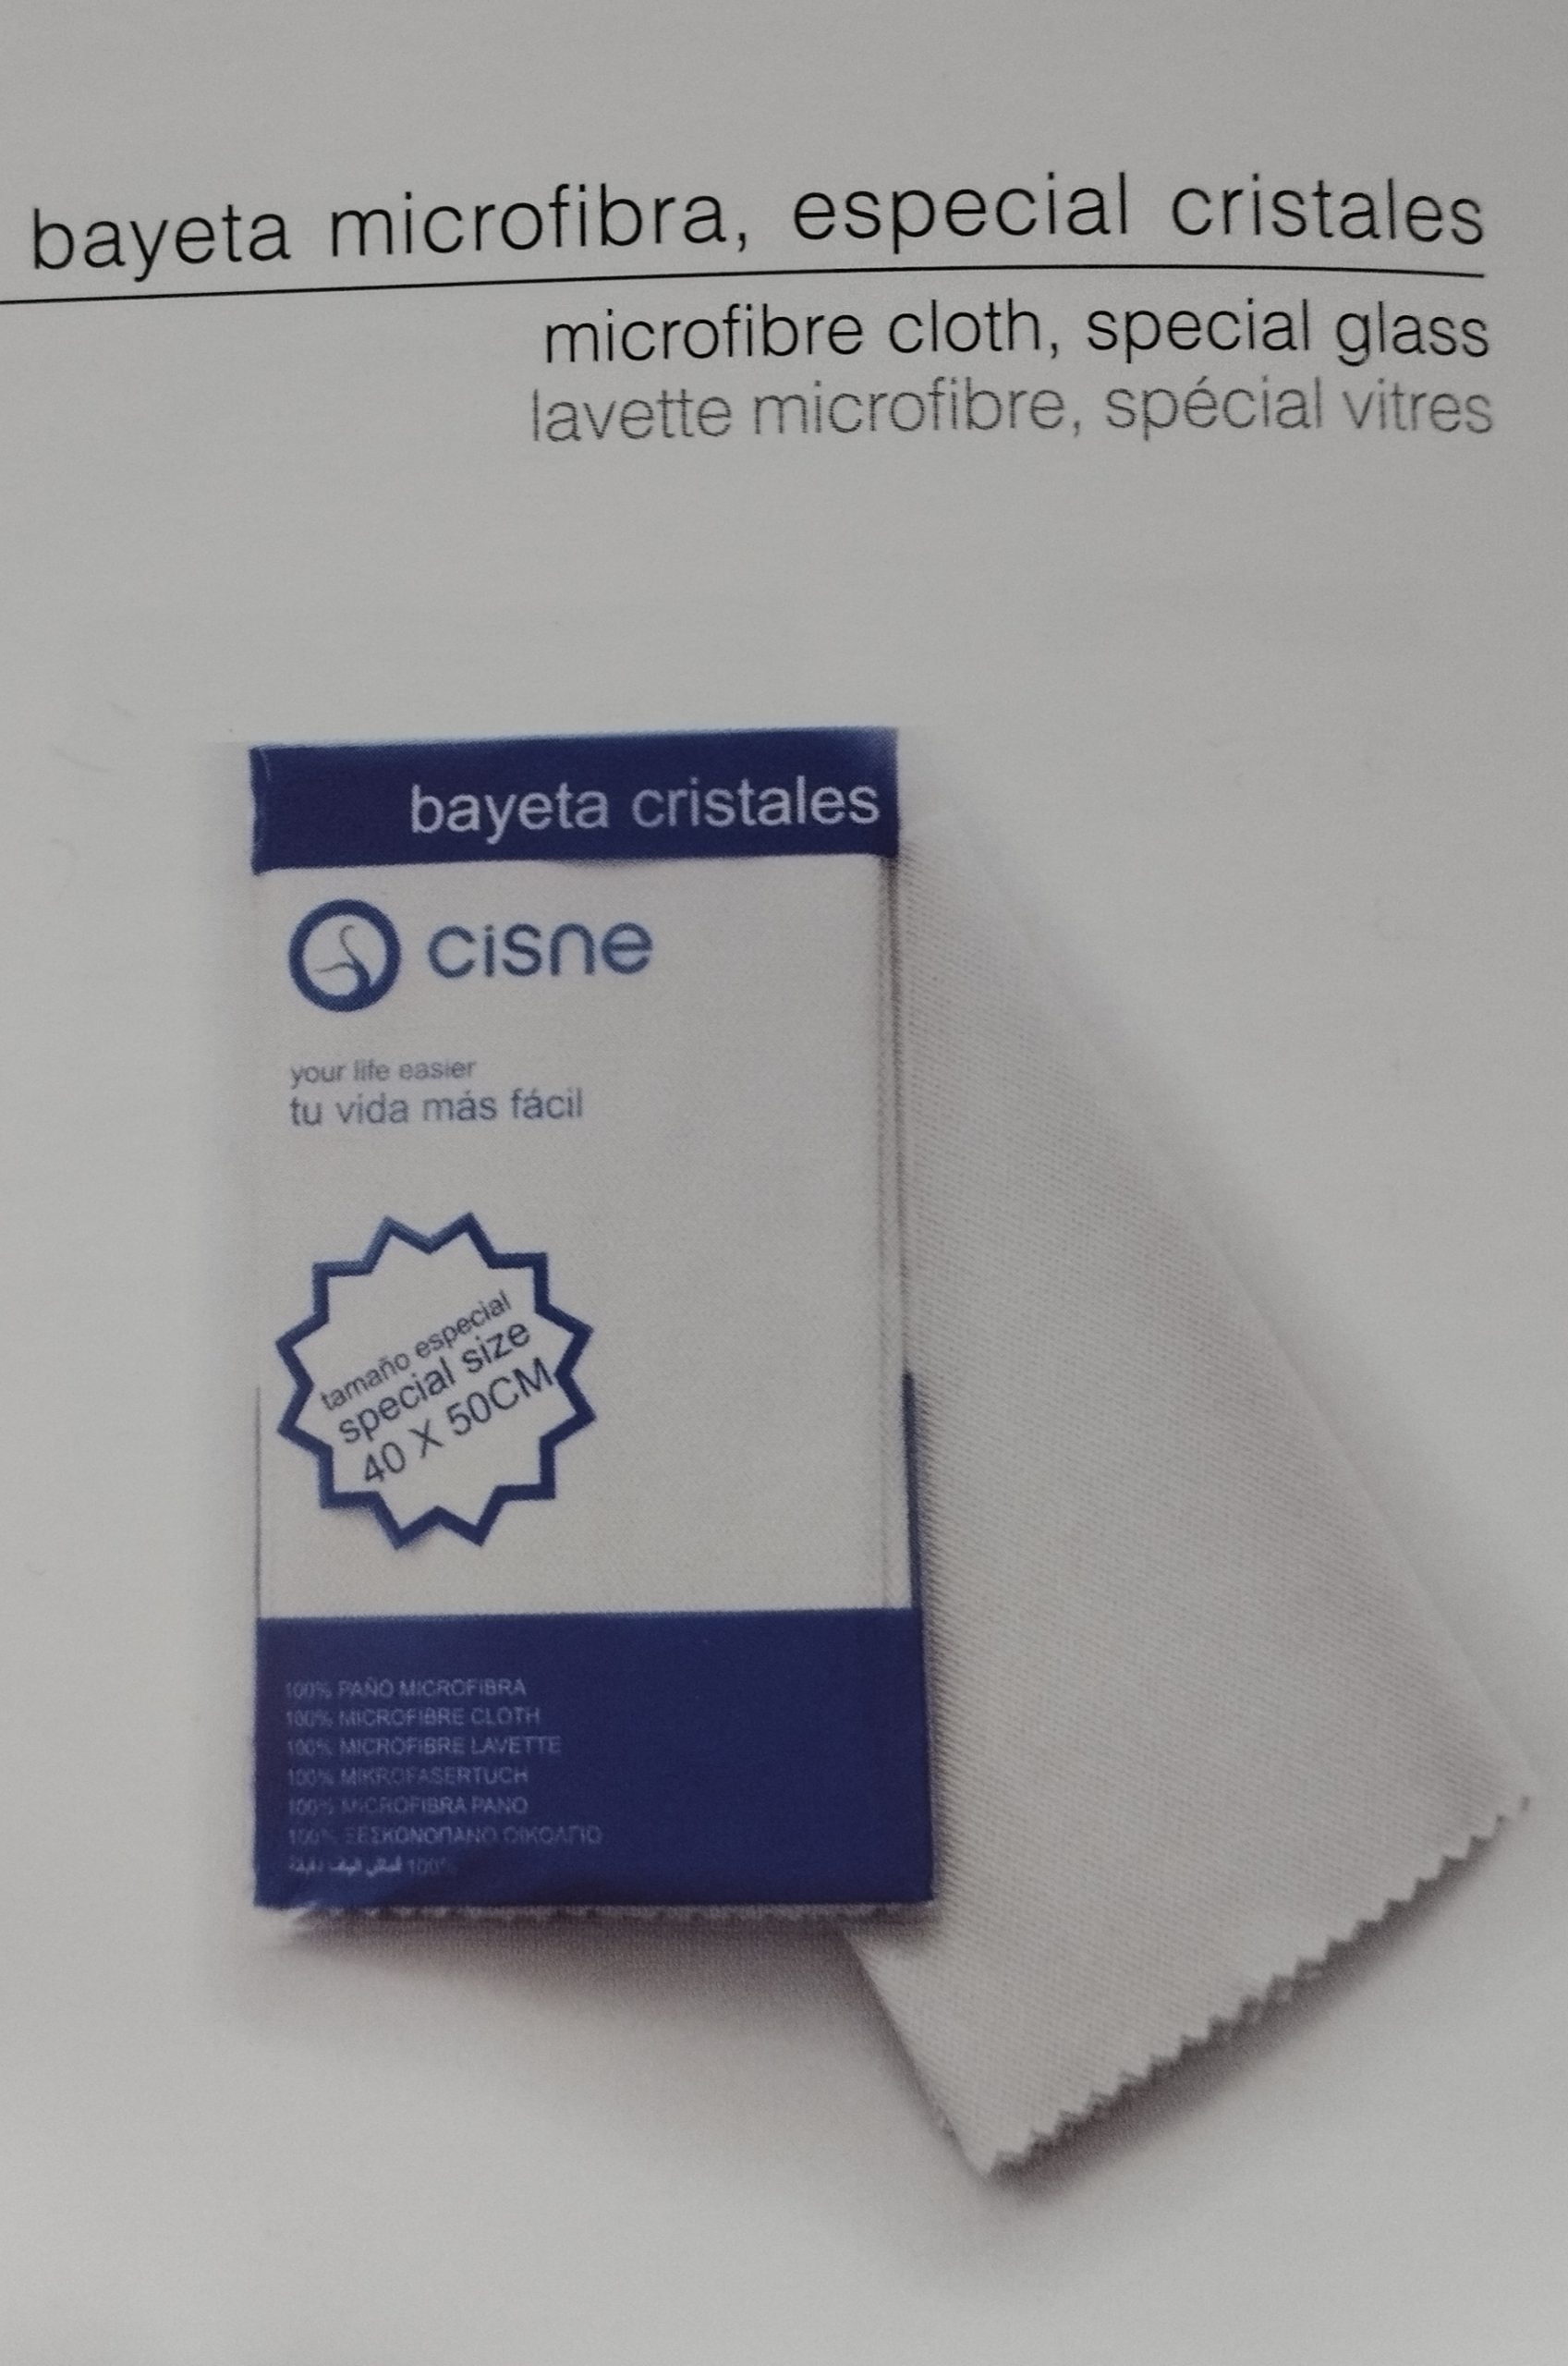 Bayeta cristales Cisne 40x50cm